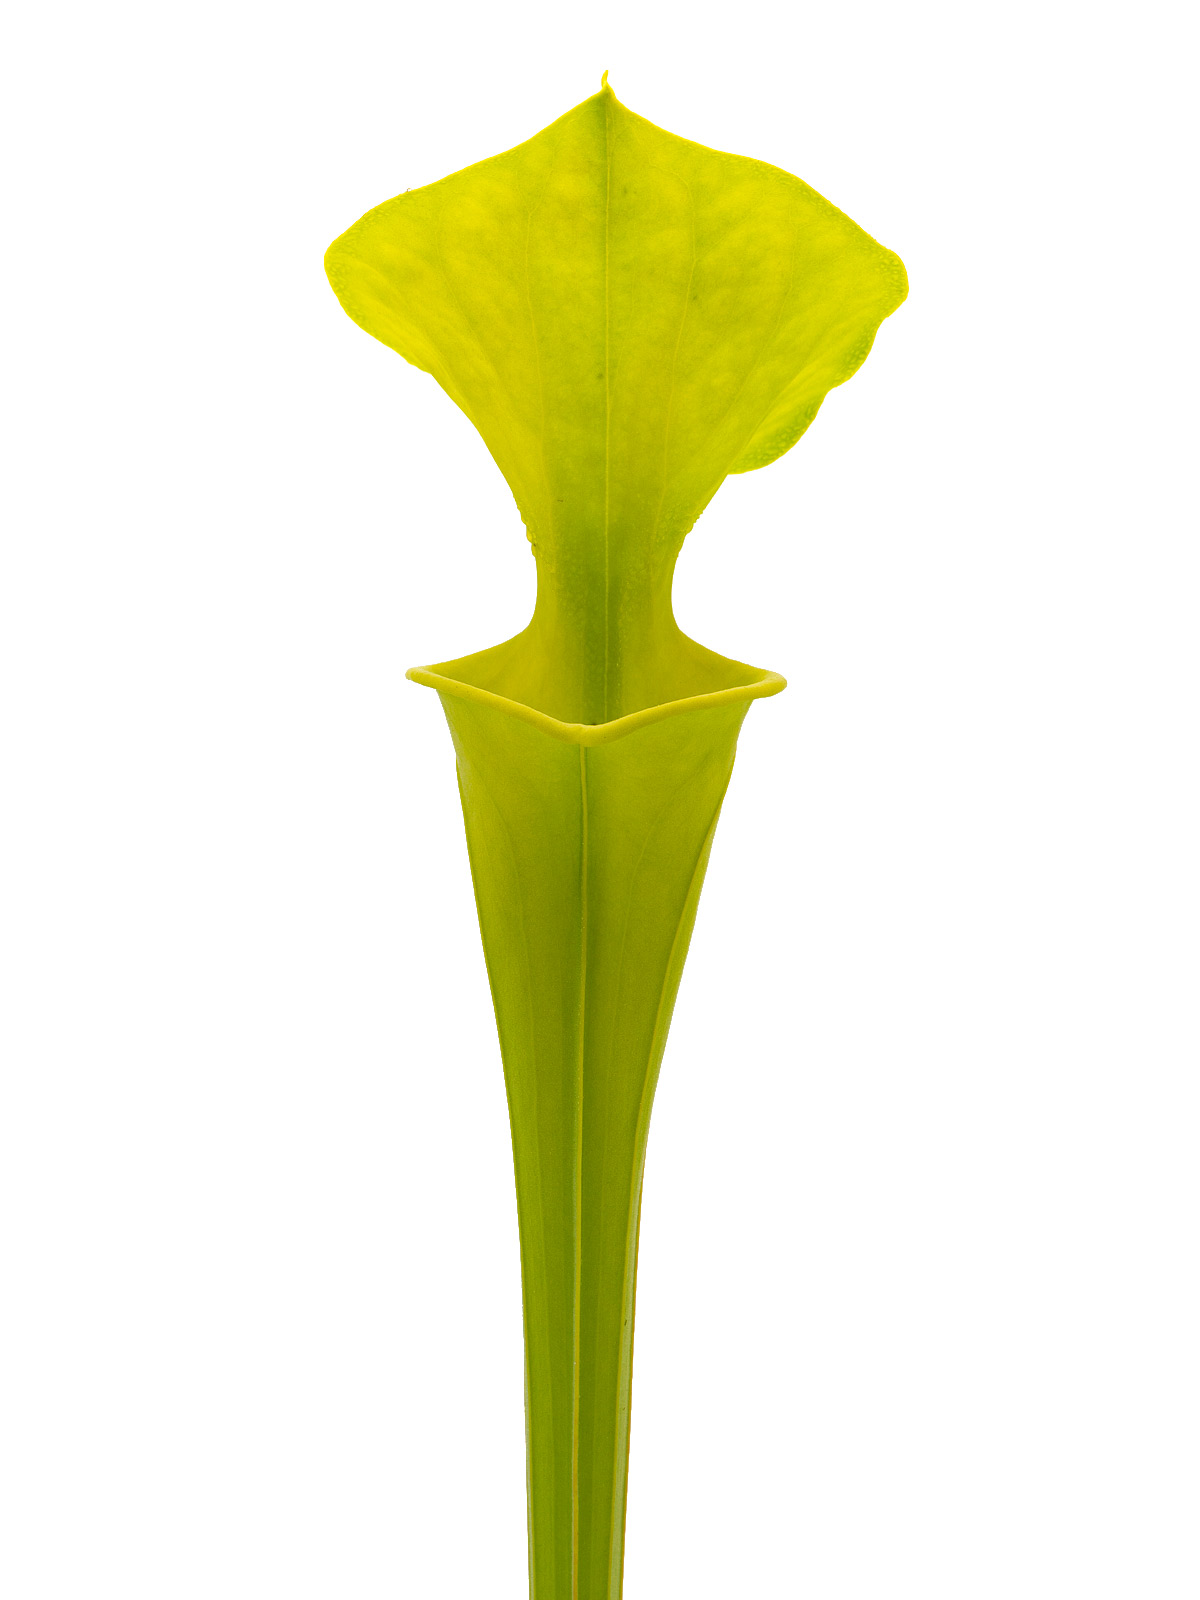 Sarracenia flava var. maxima - MK F193, Yellow pitcher, Sussex County, Virginia